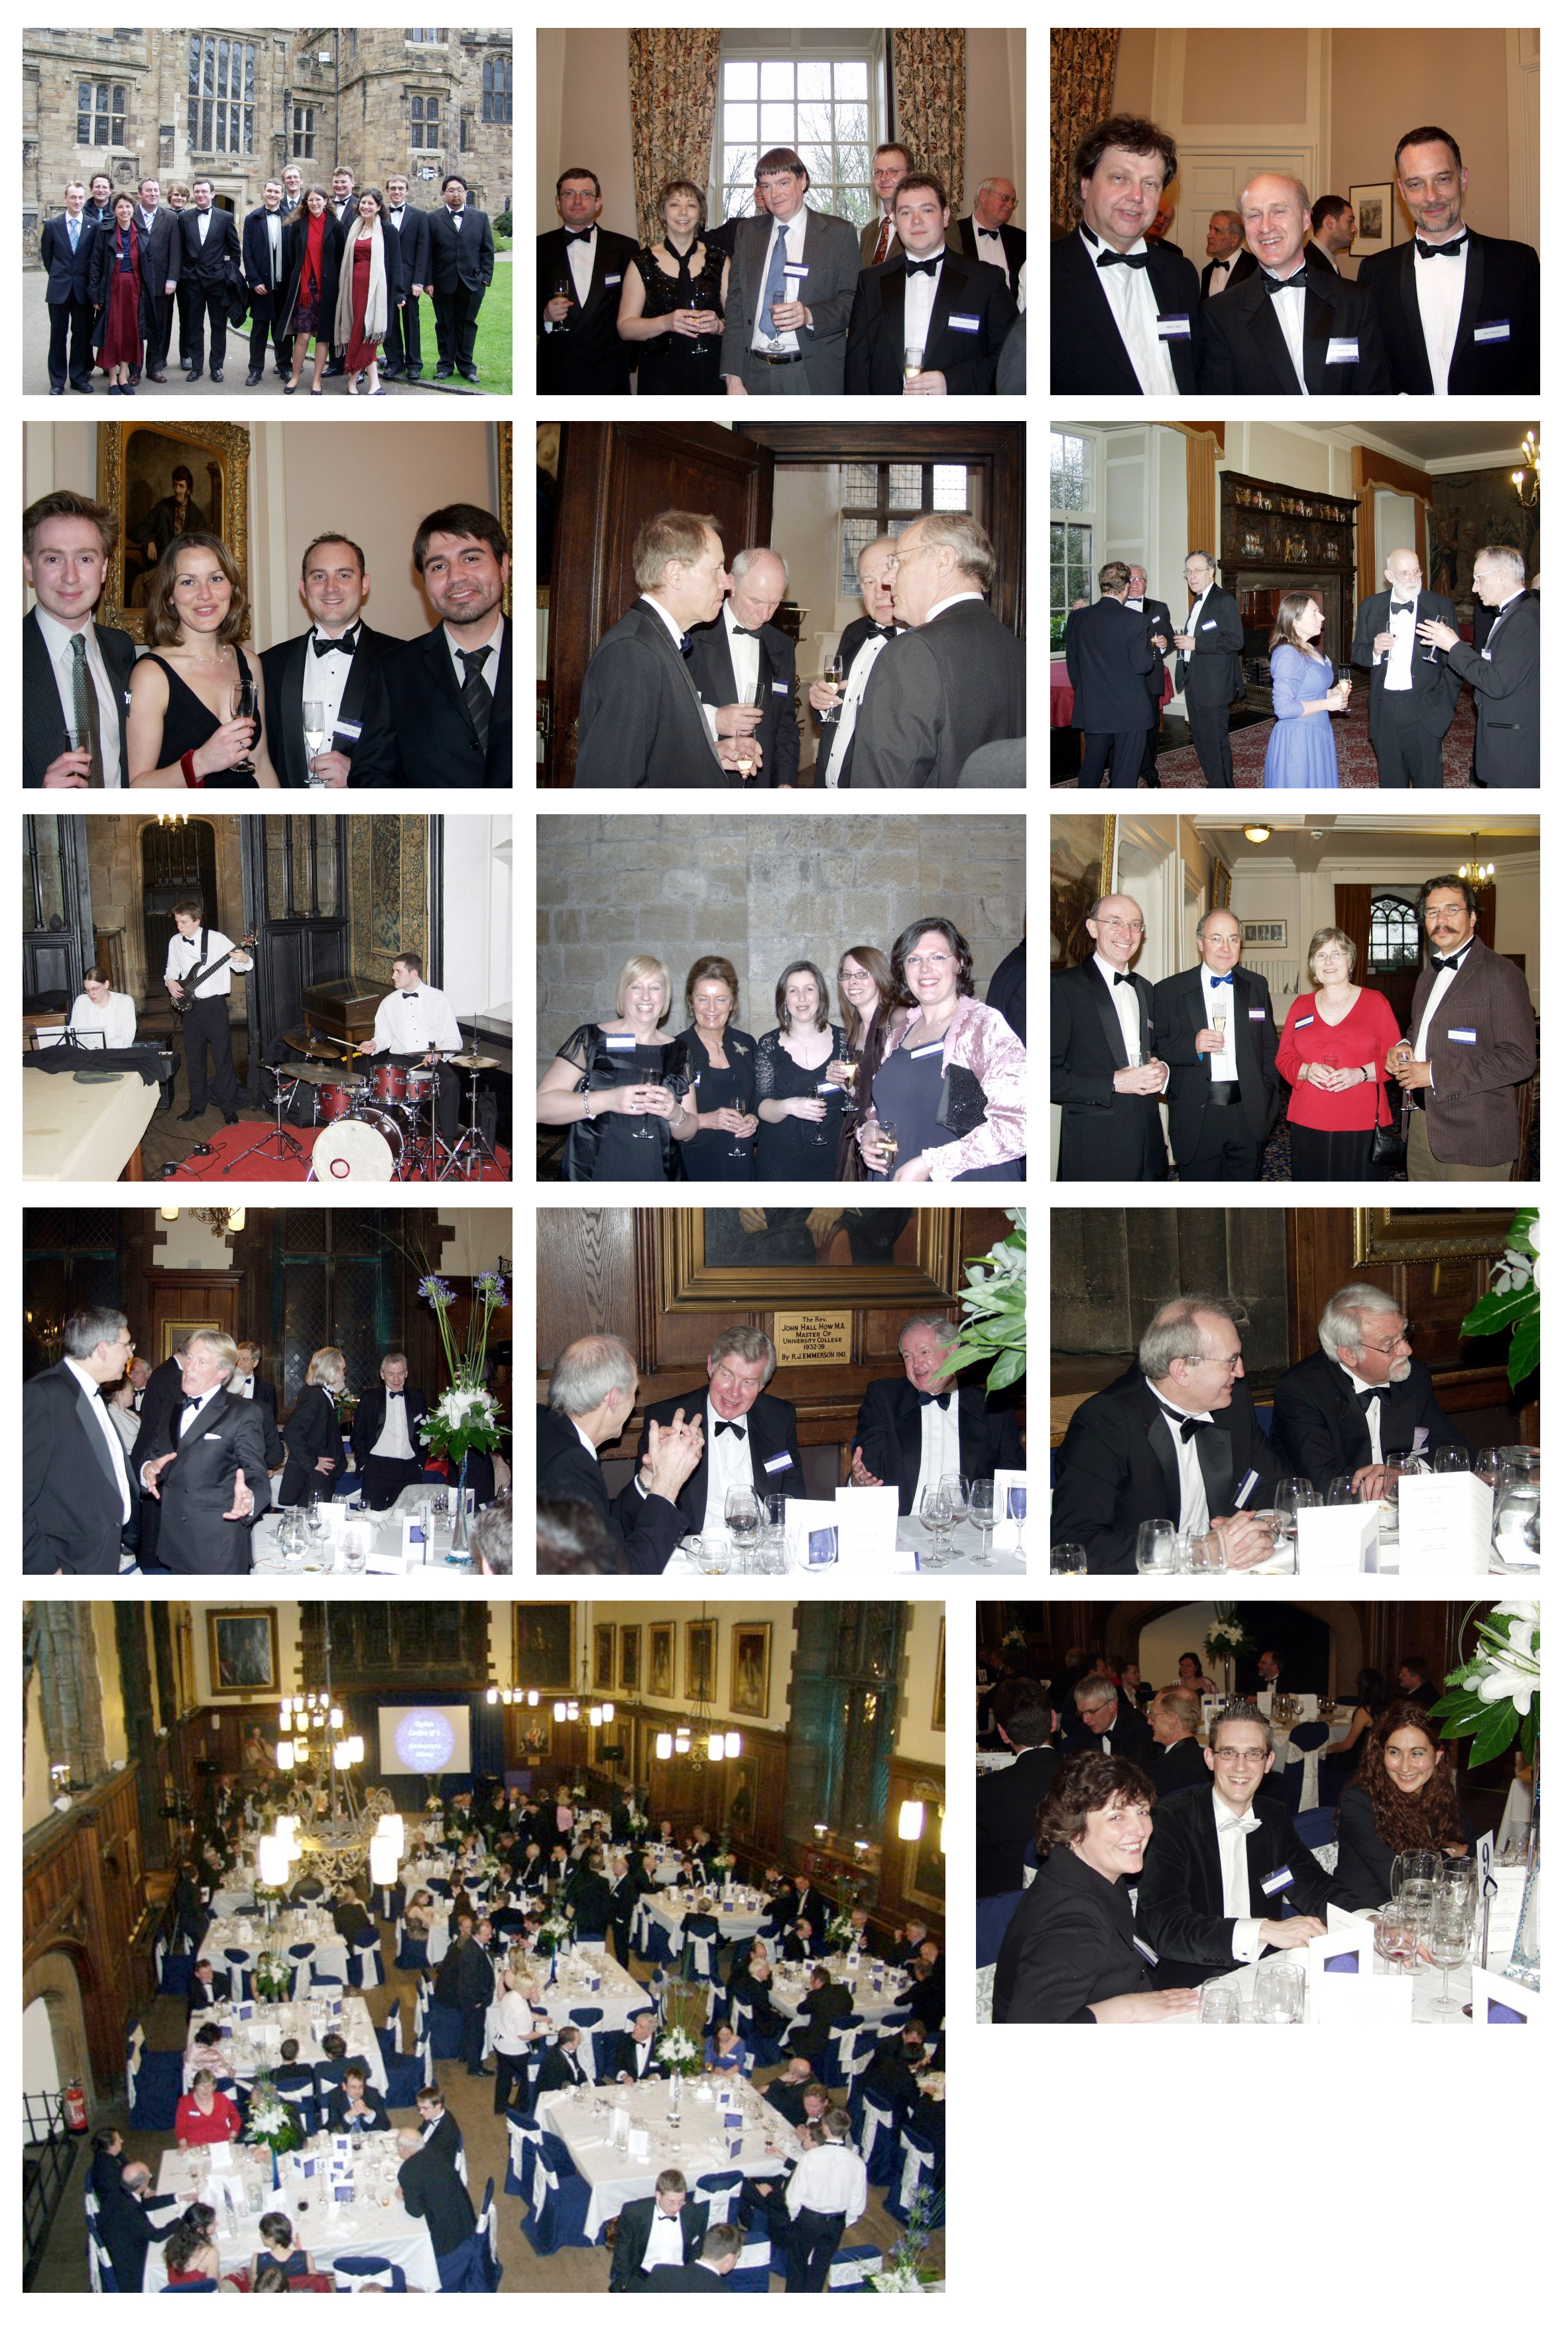 Montage of images of the Ogden @ 5 Dinner held at Durham Castle